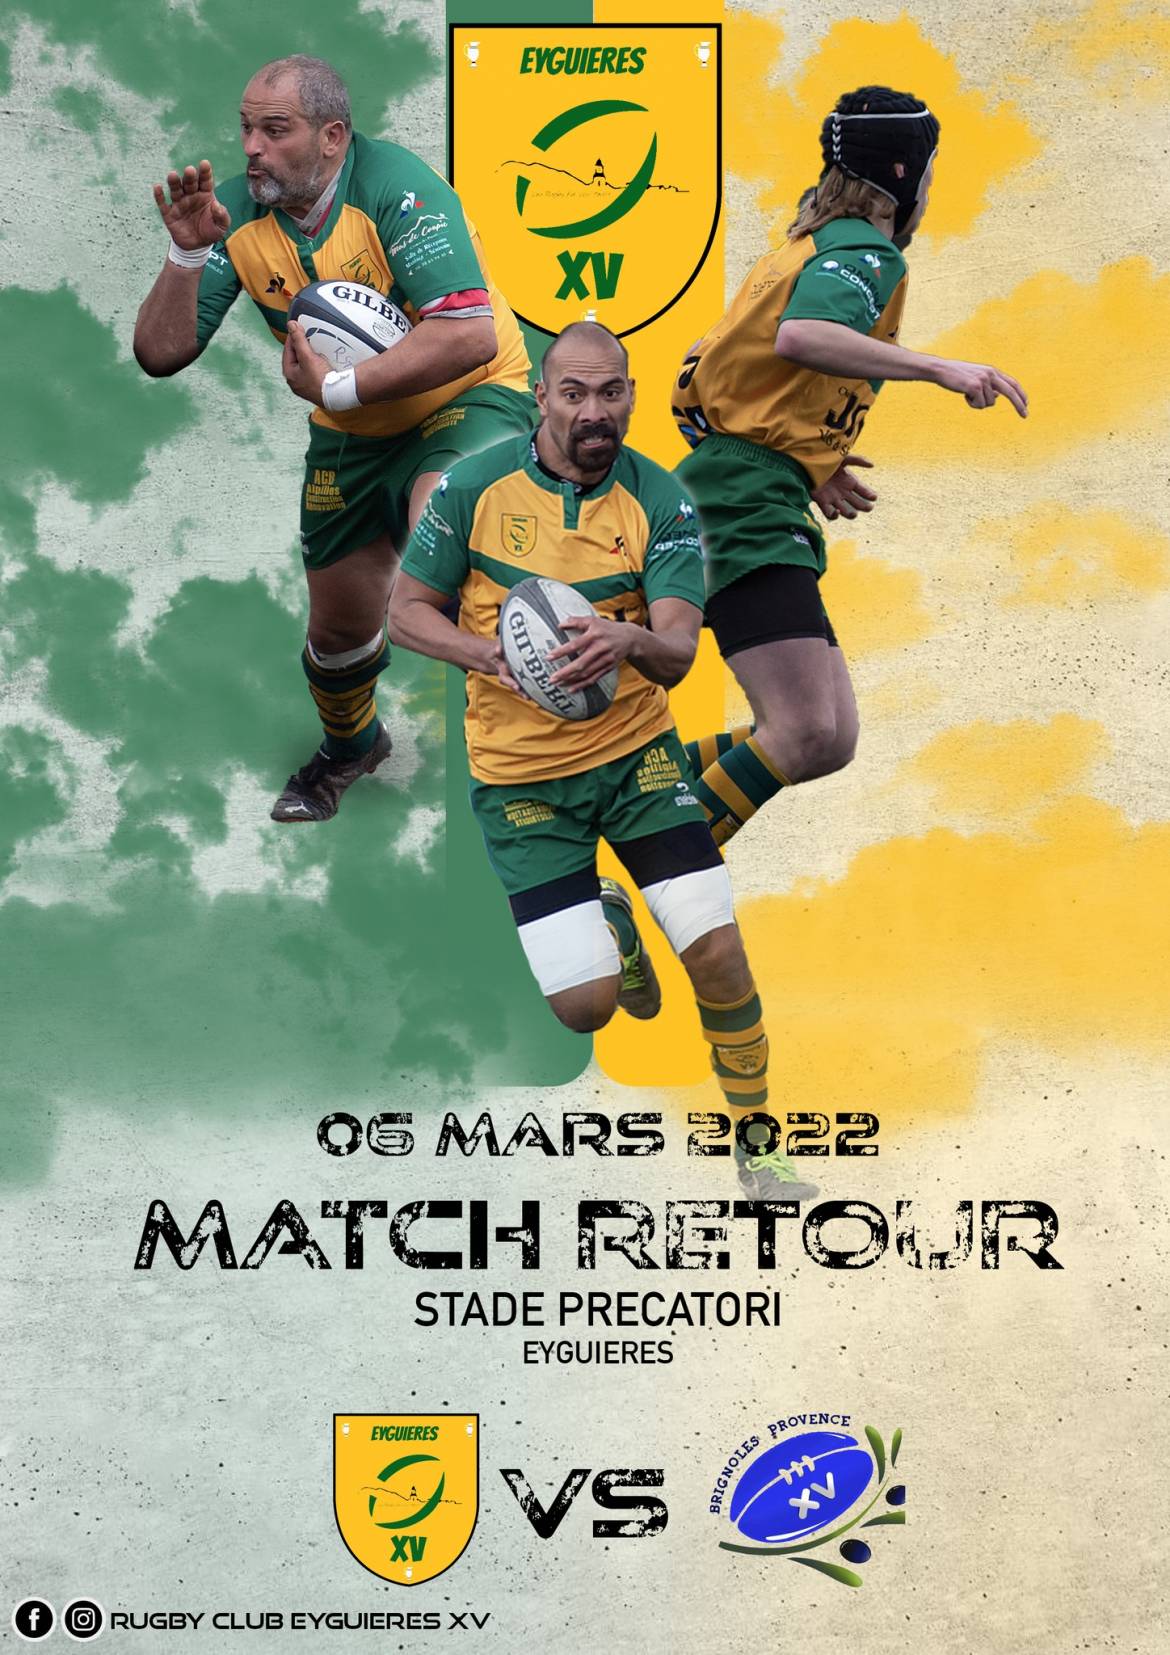 match-rugby-eugieres-6-mars-2022.jpg